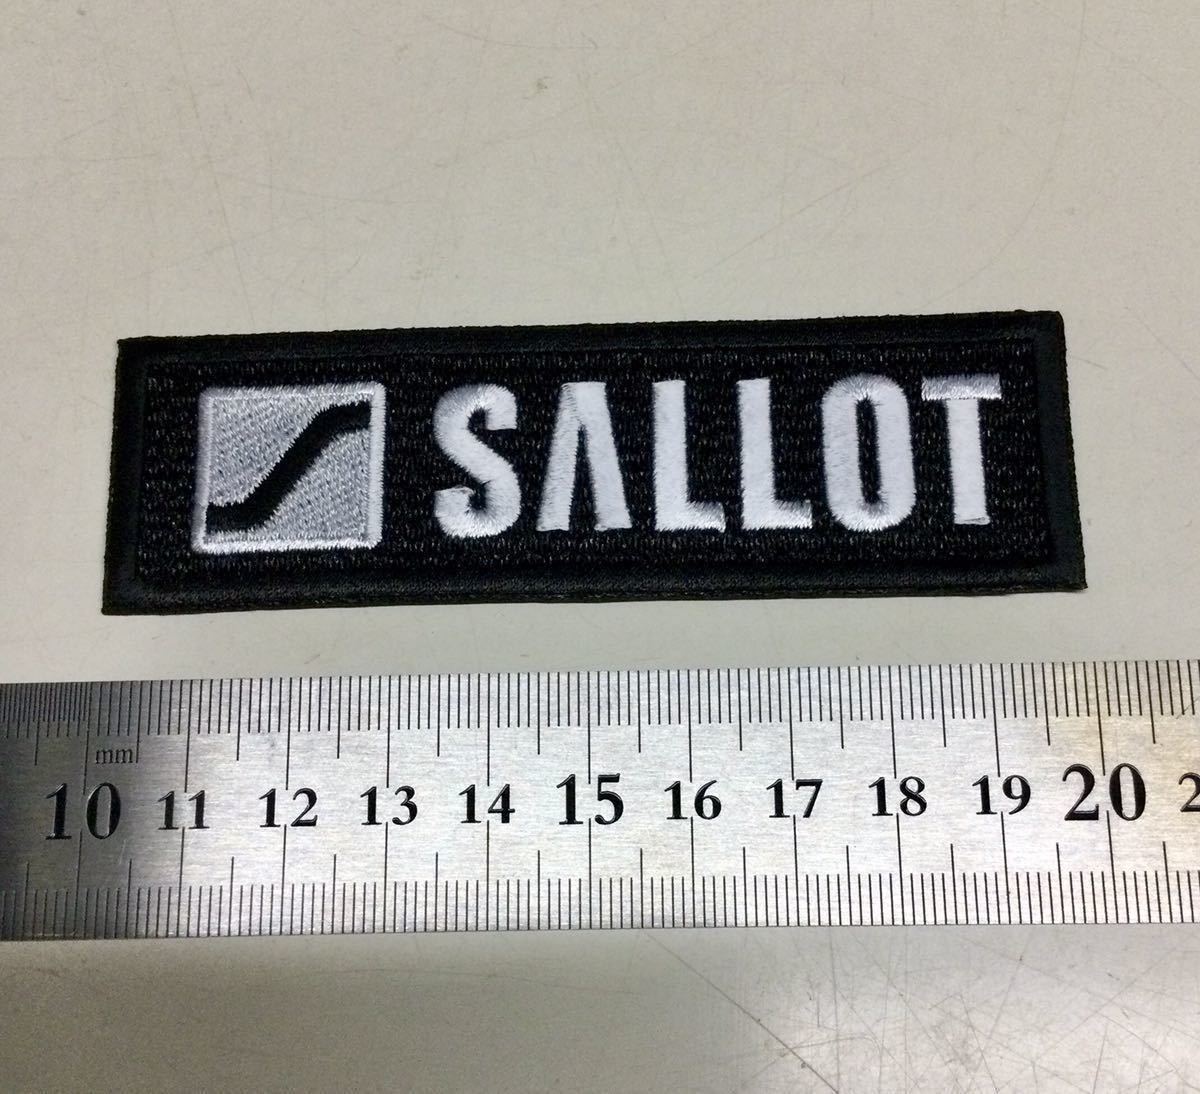 SALLOTsa Rod бренд Logo нашивка черный я . лыжи .!